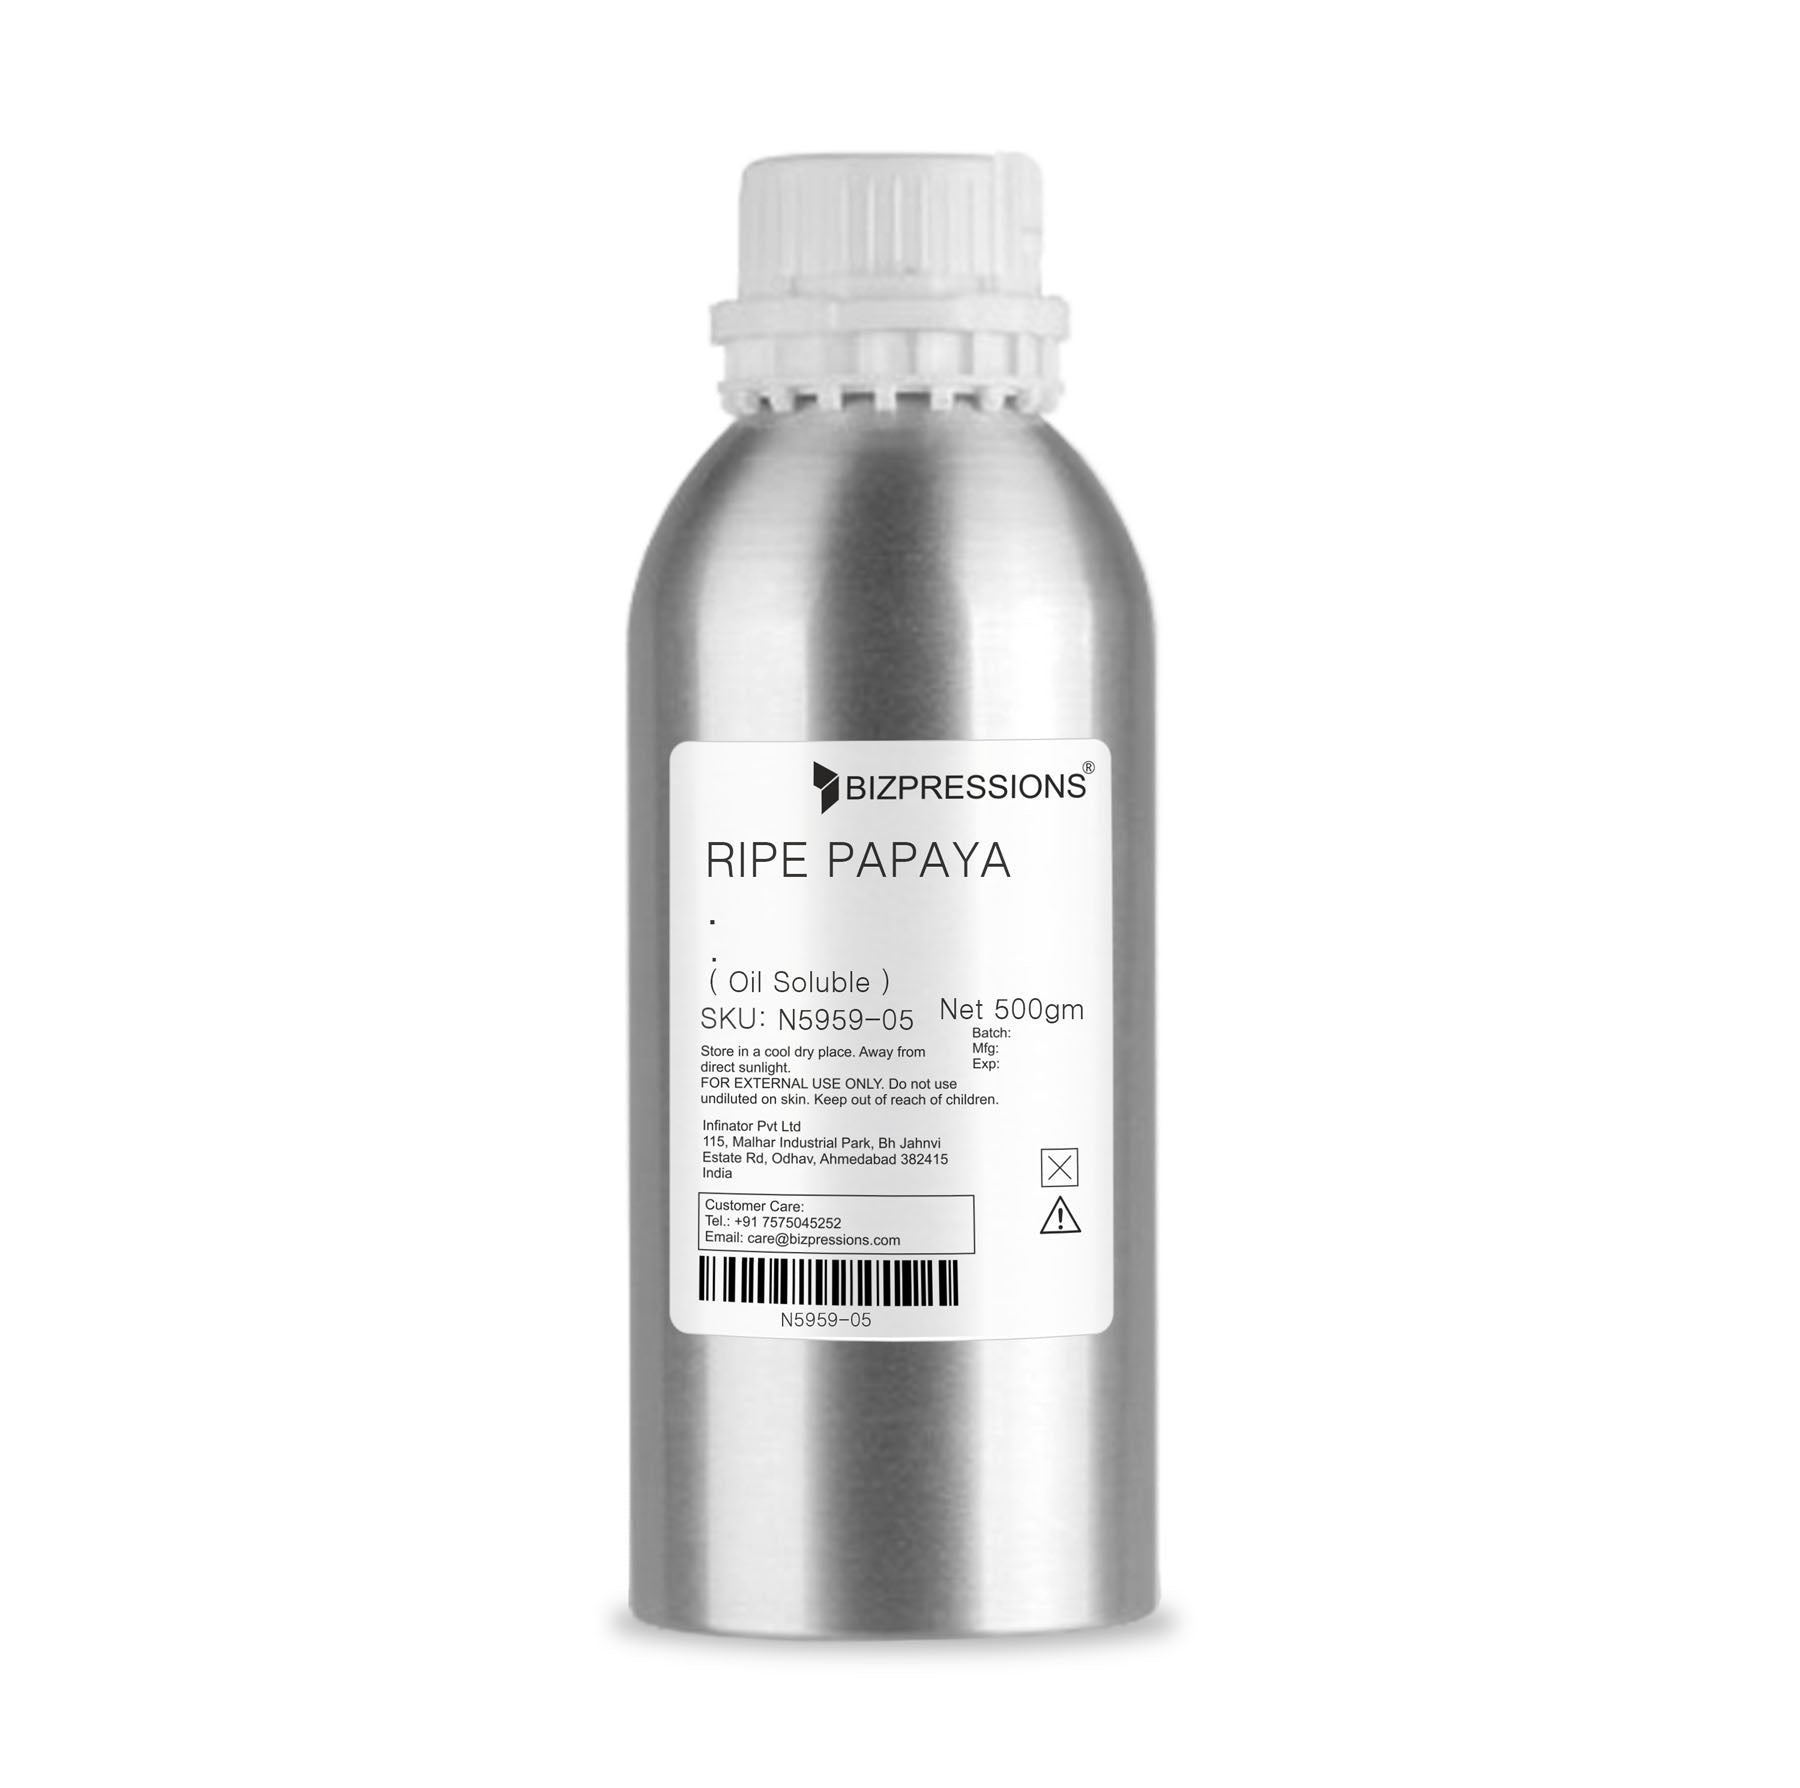 RIPE PAPAYA - Fragrance ( Oil Soluble ) - 500 gm